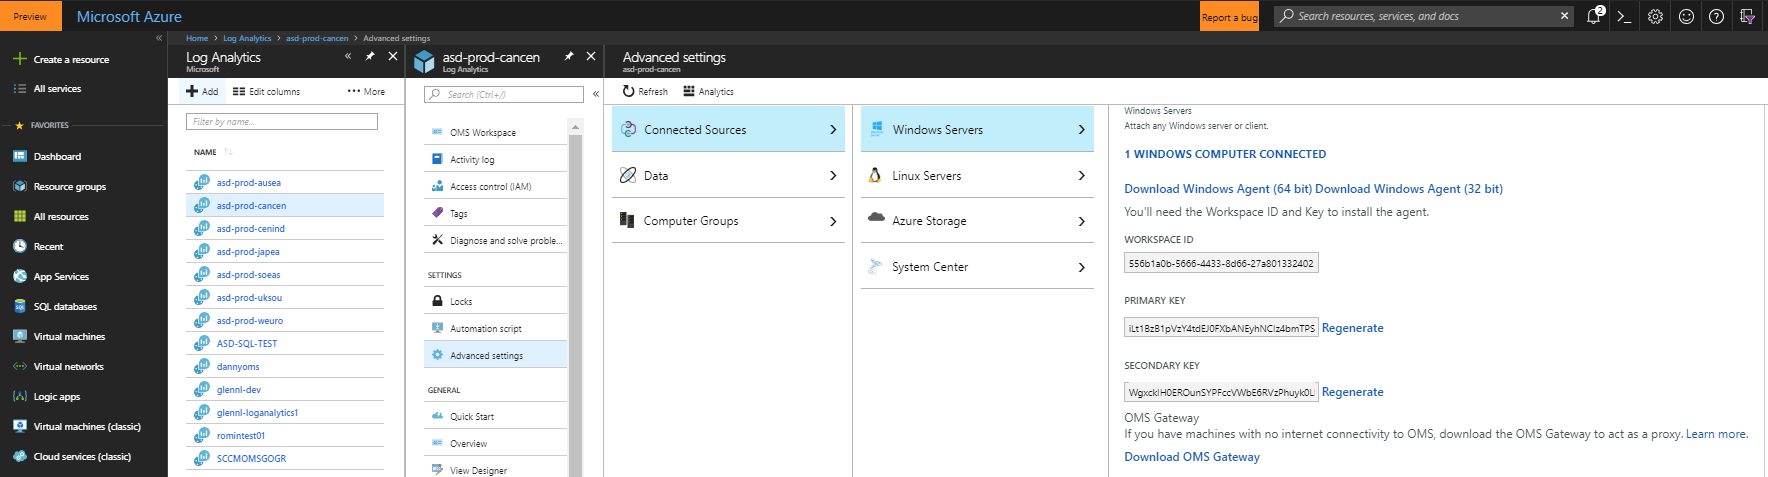 Microsoft Azure 視窗顯示已選取 [連線來源] 和 [Windows Server] 功能表項目。